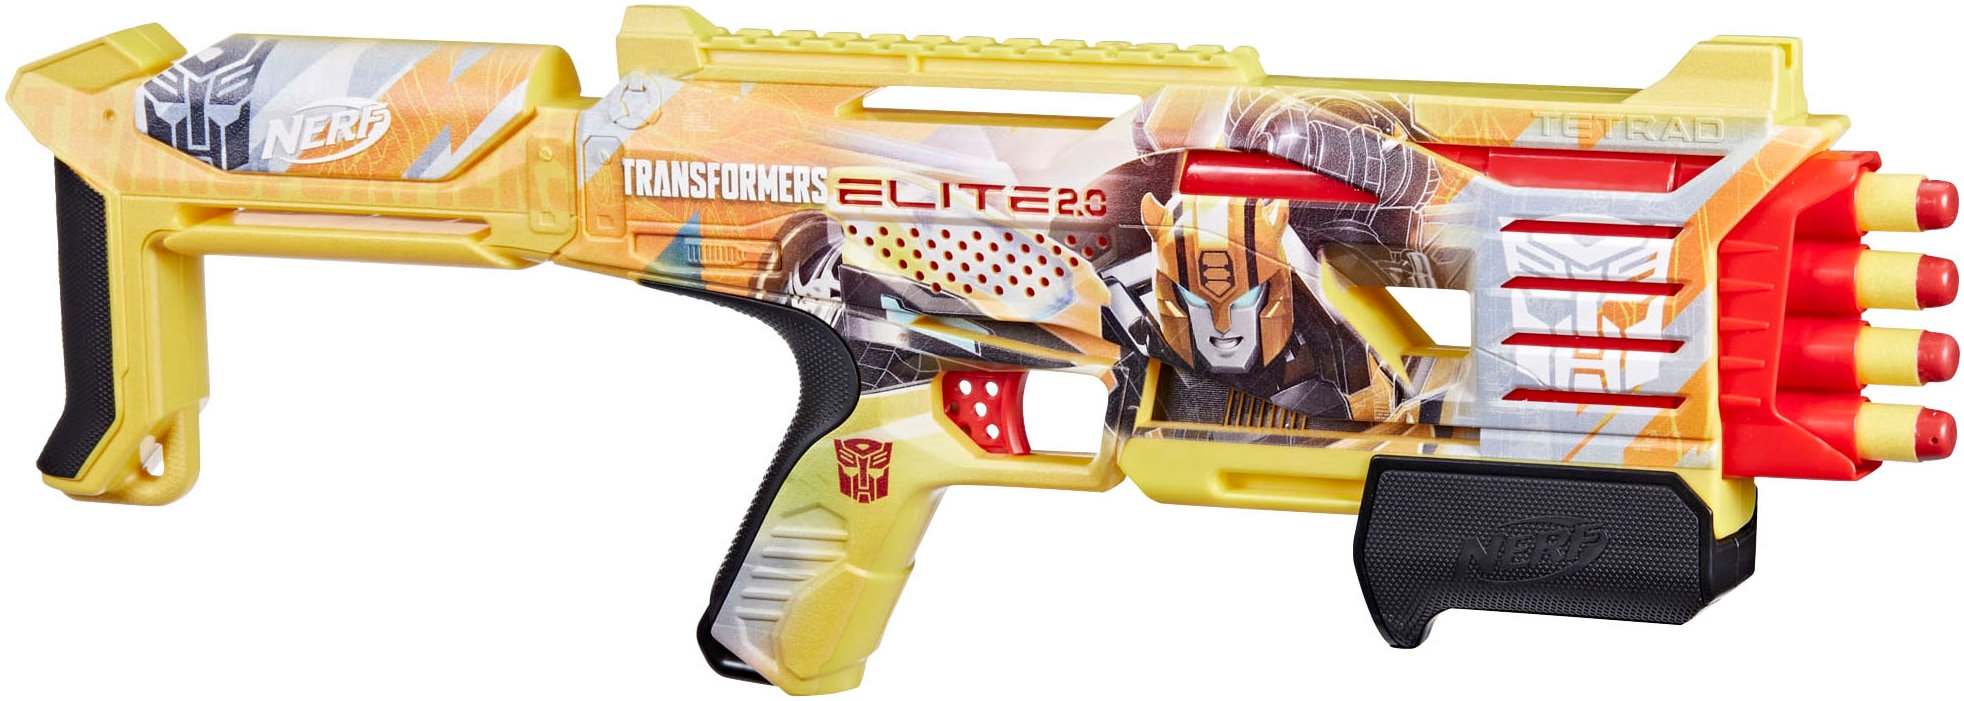 Hasbro Blaster »Nerf Transformers Bumblebee Blaster«